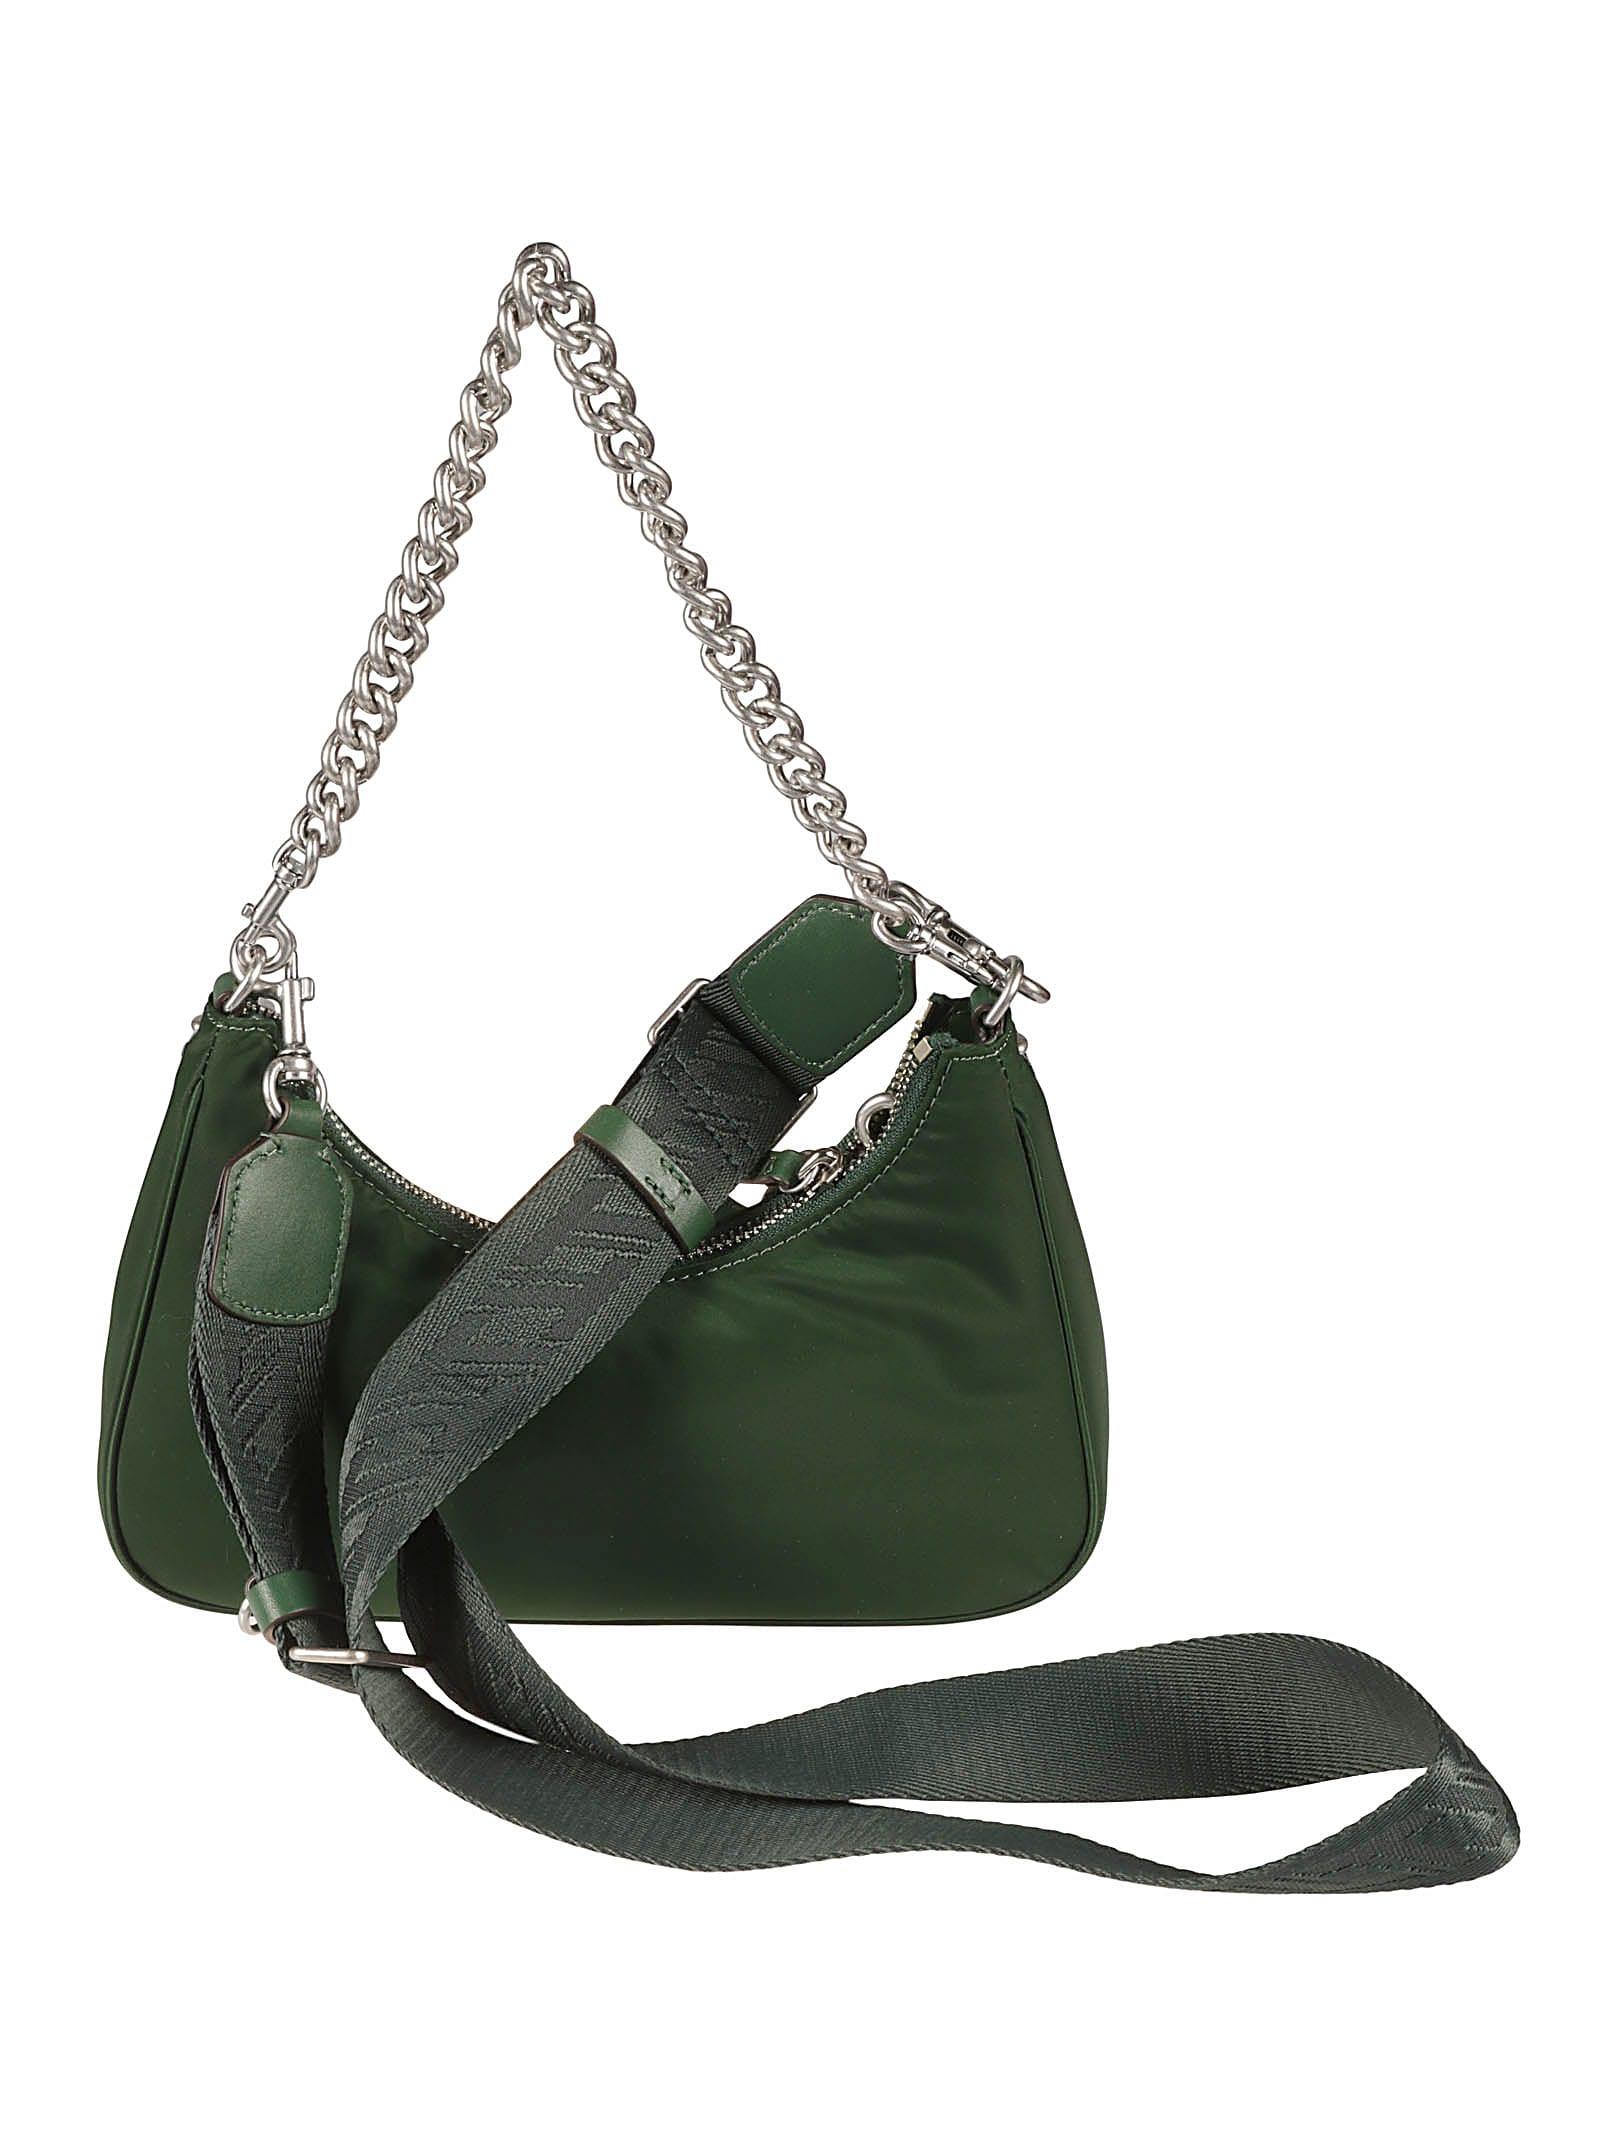 Tory Burch Chain Strap Top Zip Shoulder Bag in Green | Lyst